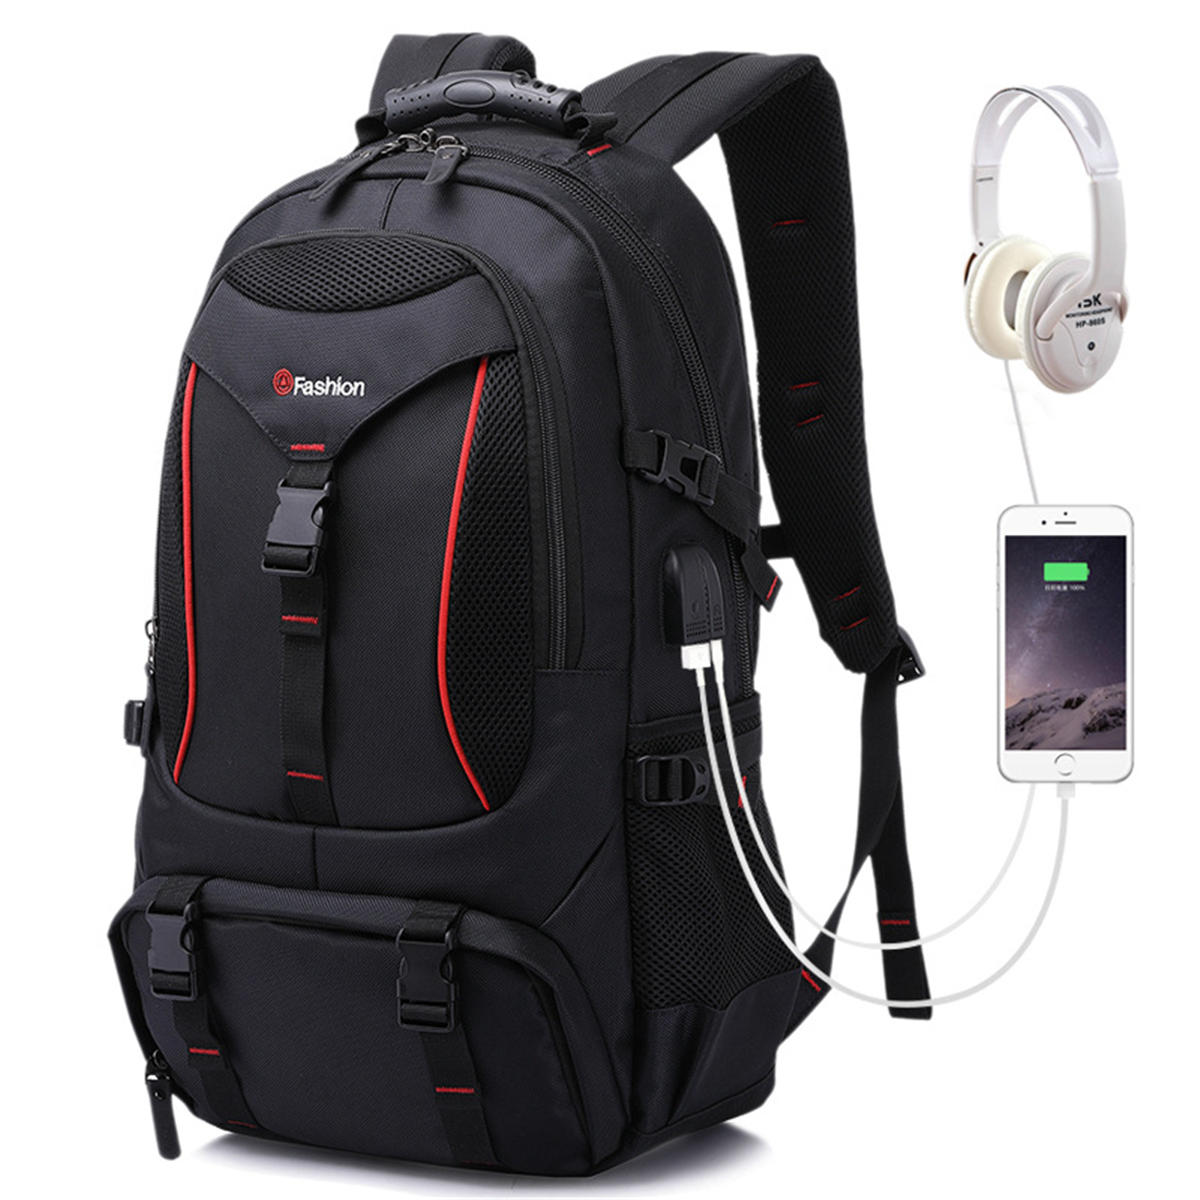 Men Outdoor Hiking Backpack Sports Travel USB Port Camping Daypack Waterproof Bag